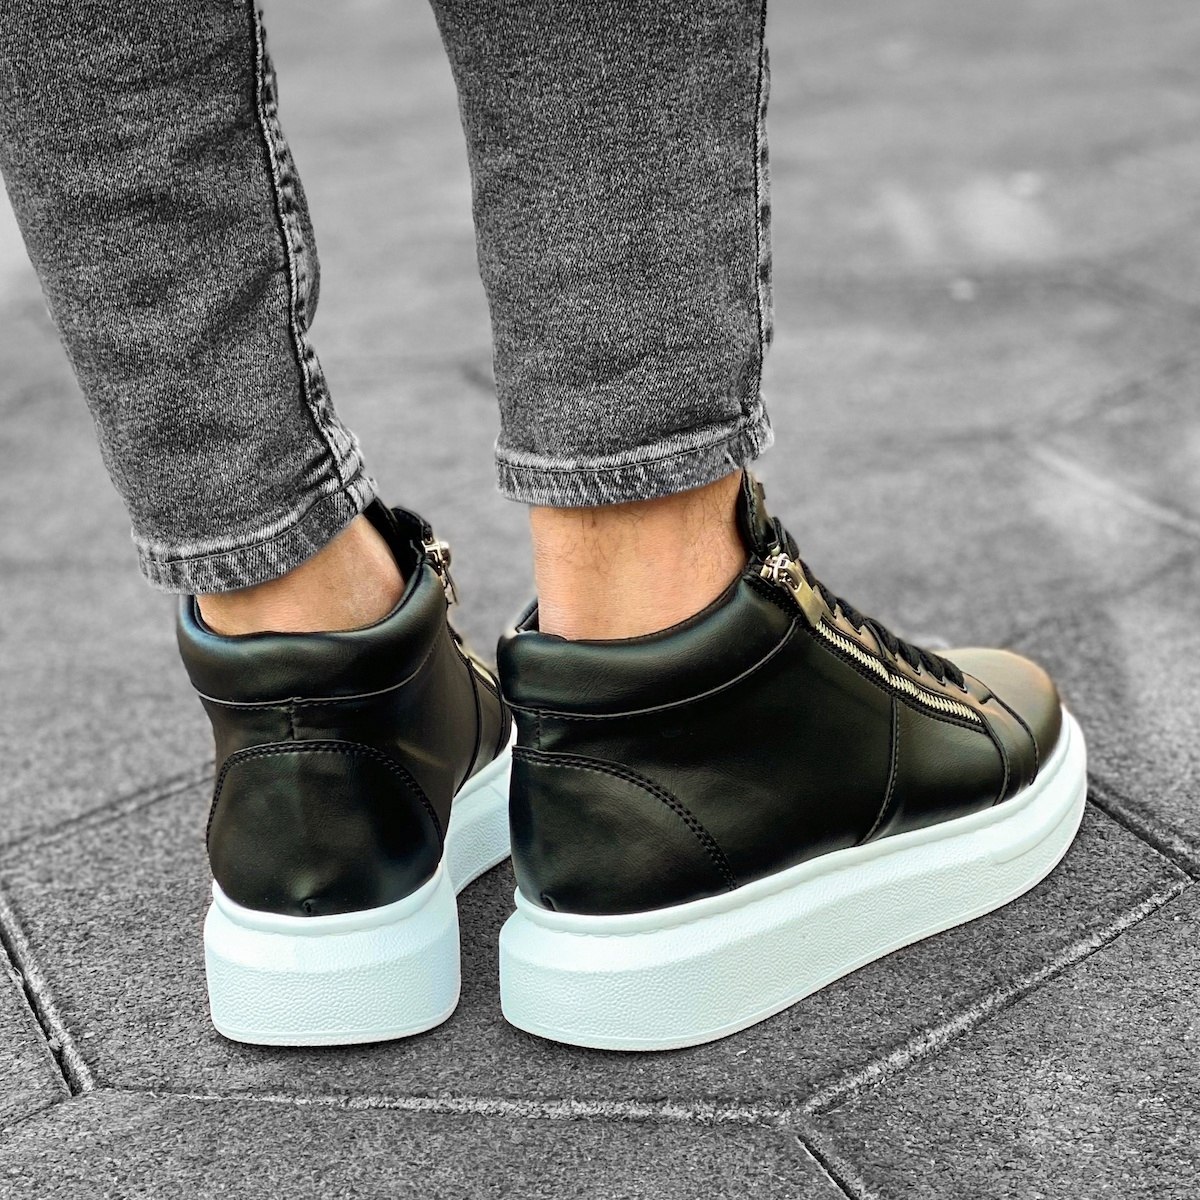 Men’s High Top Sneakers Designer Zipper Shoes Black-White | Martin Valen